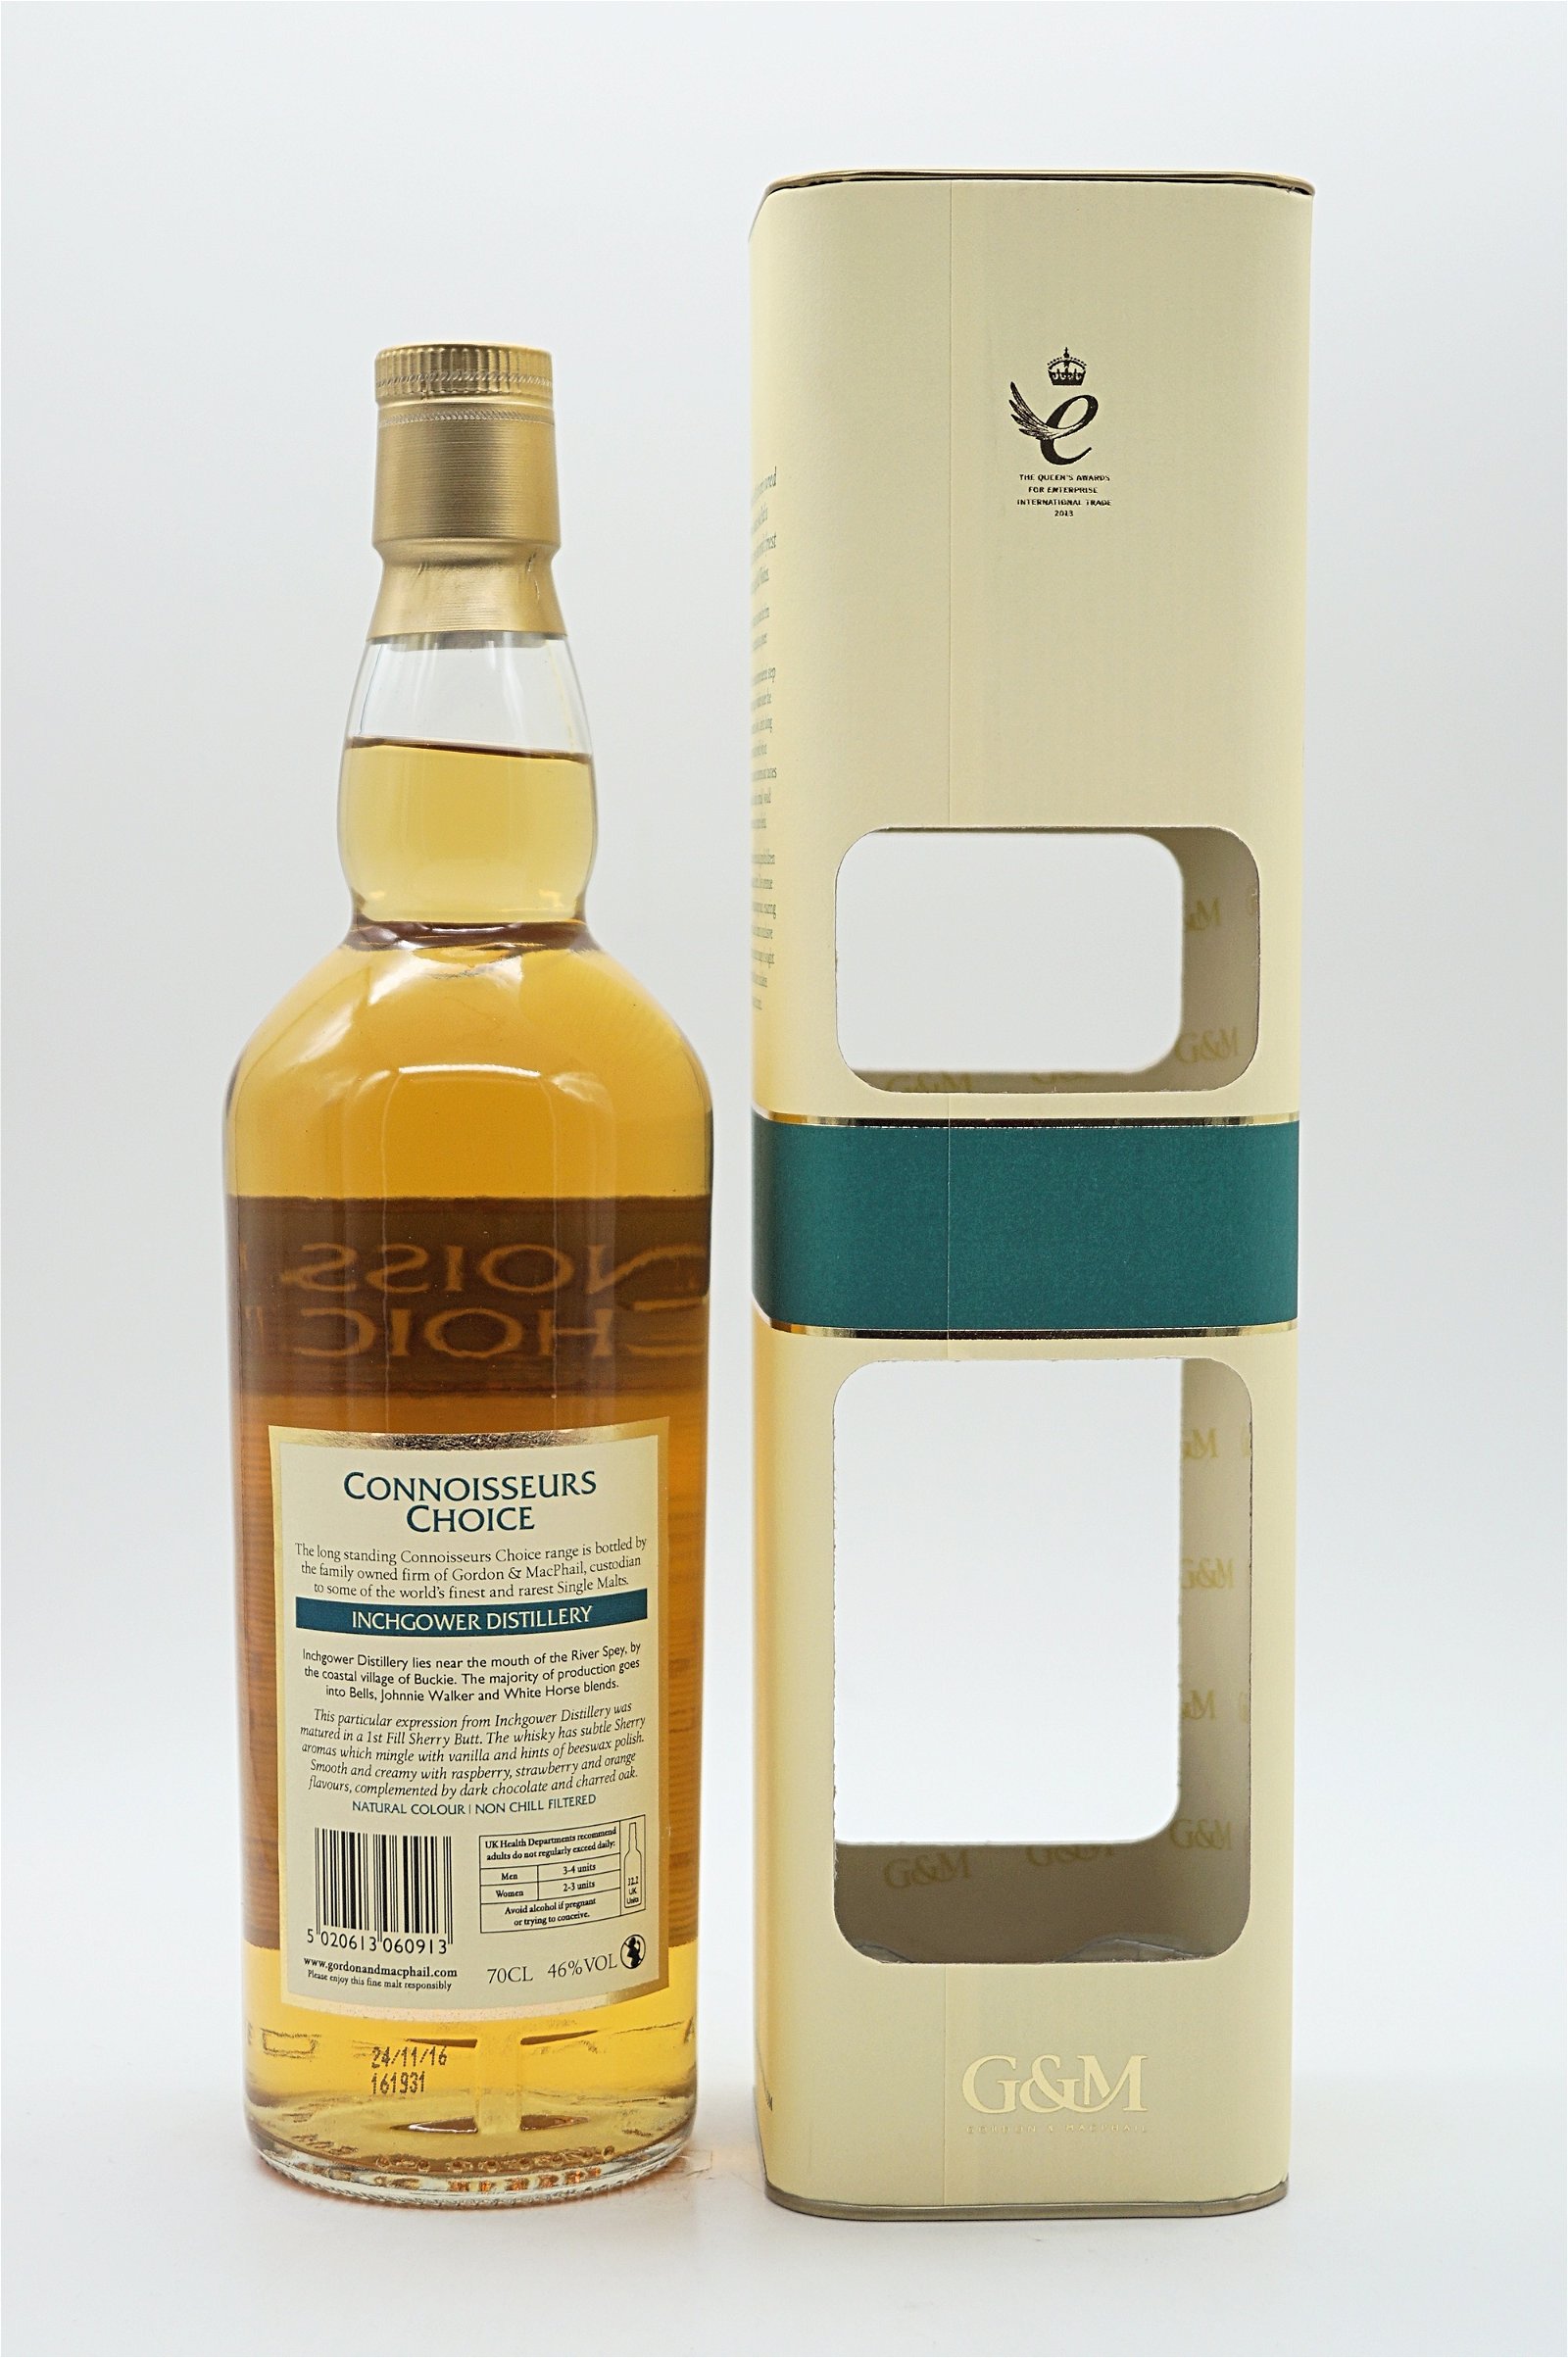 Gordon & Macphail Connoissuers Choice Inchgower 9 Jahre 2007/2016 Single Malt Scotch Whisky